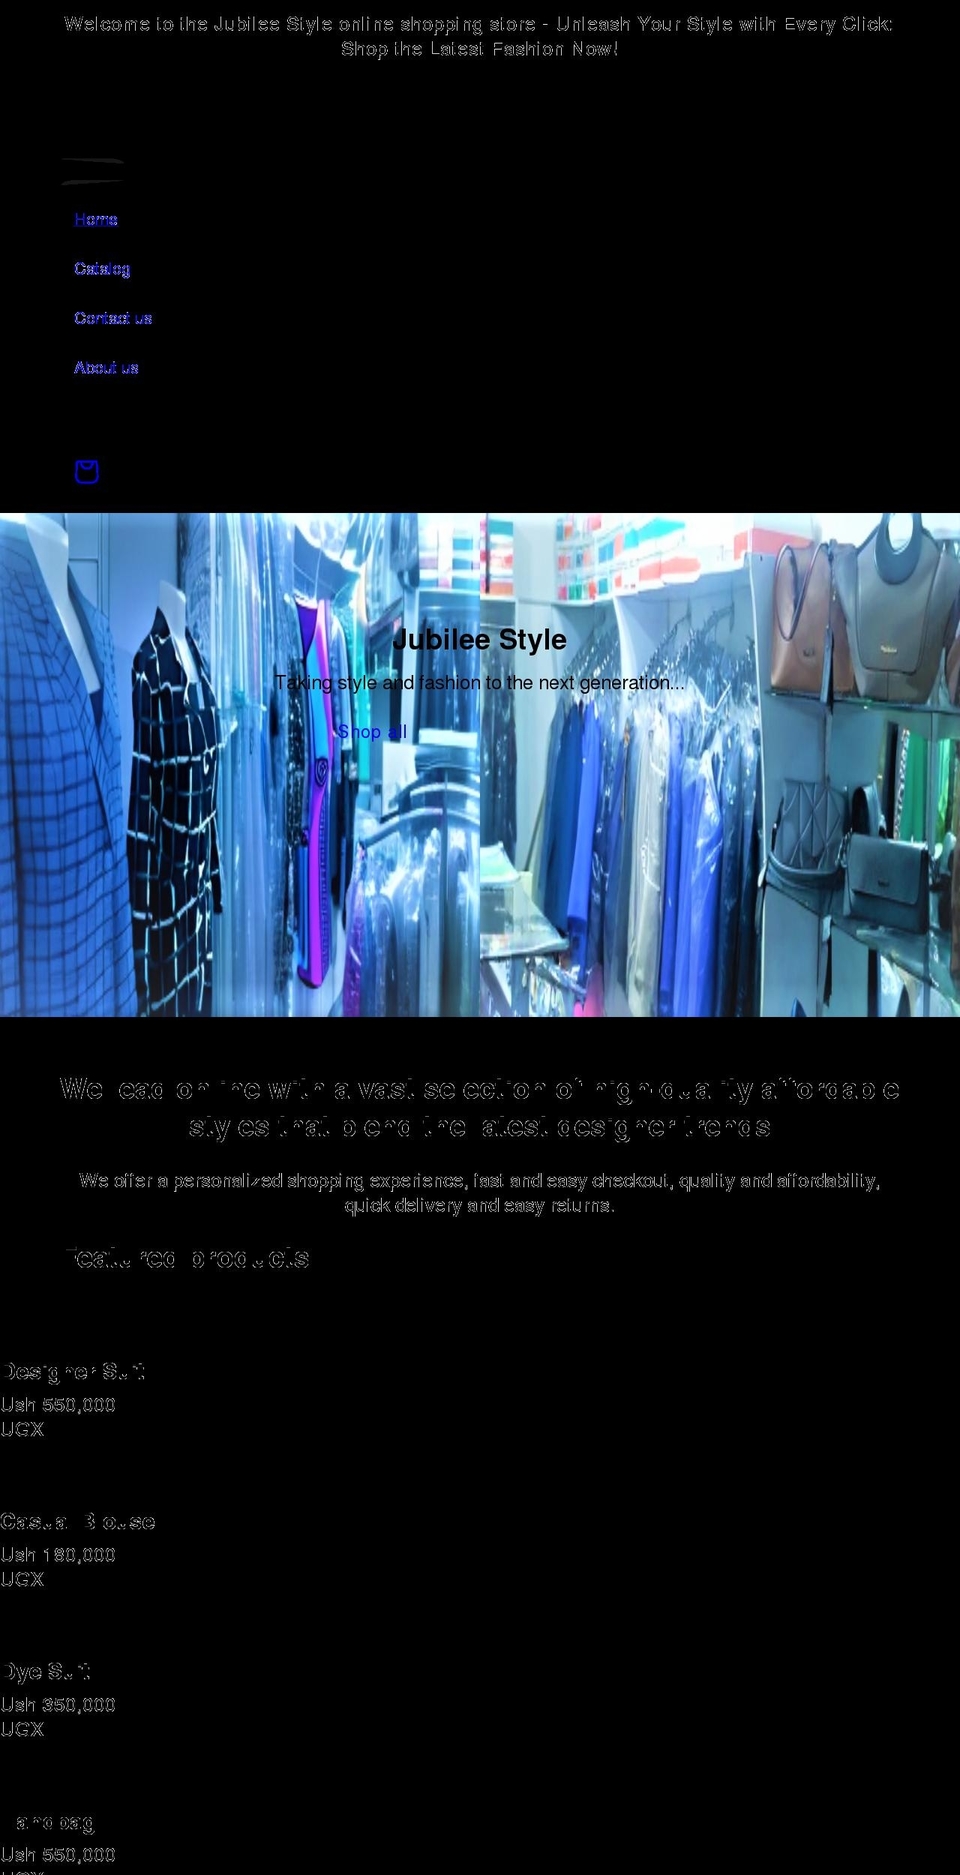 jubileestyle.com shopify website screenshot